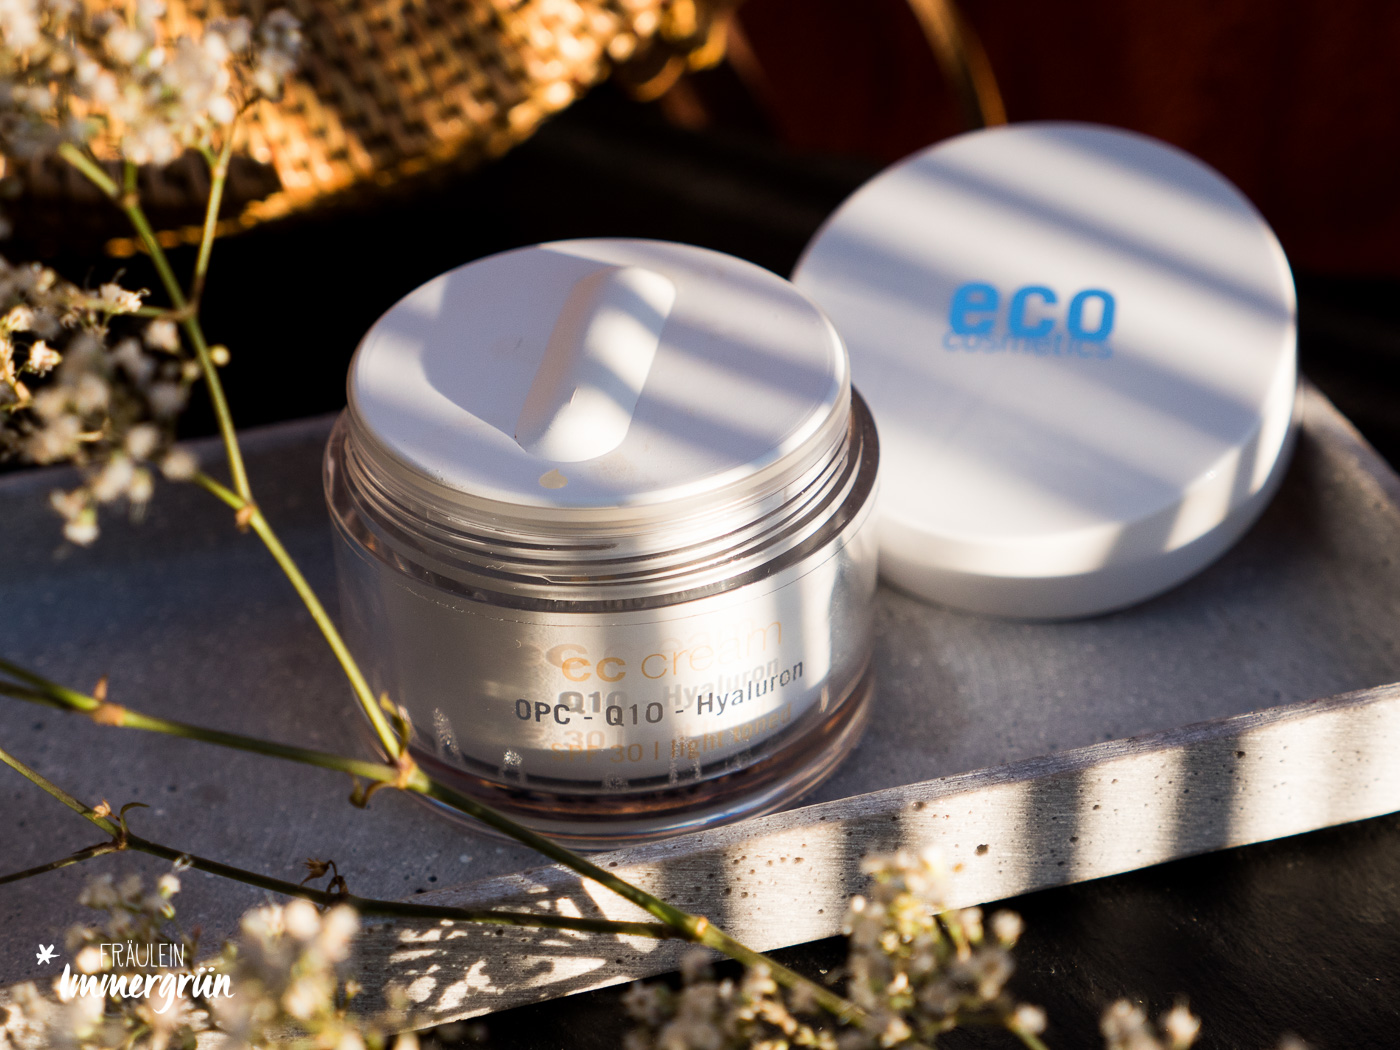 Eco Cosmetics CC Cream mit SPF 30 in Light Toned mit OPC, Q10 und Hyaluron